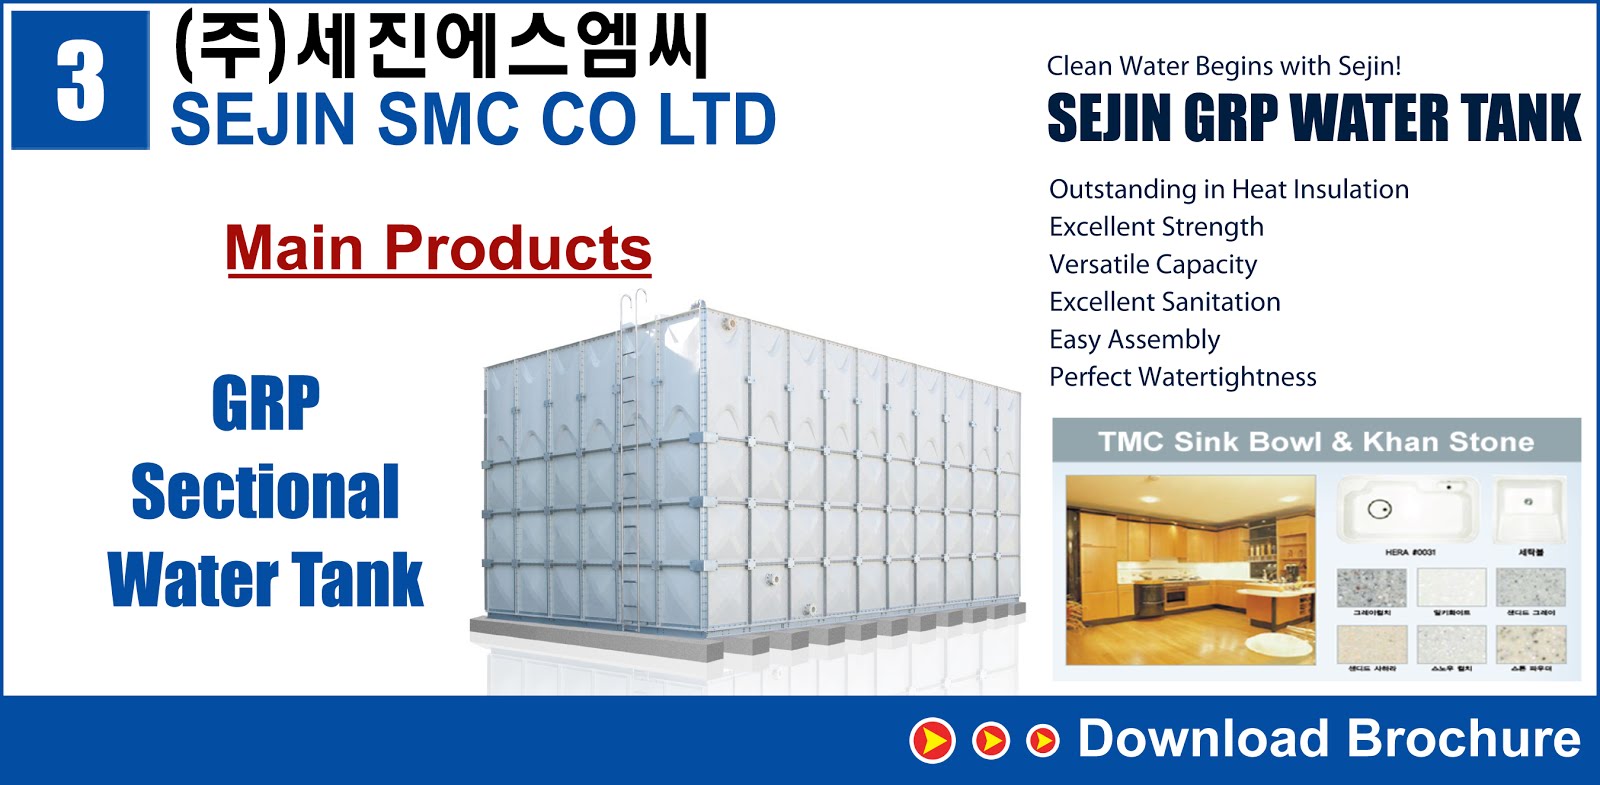 3.SEJIN SMC CO LTD